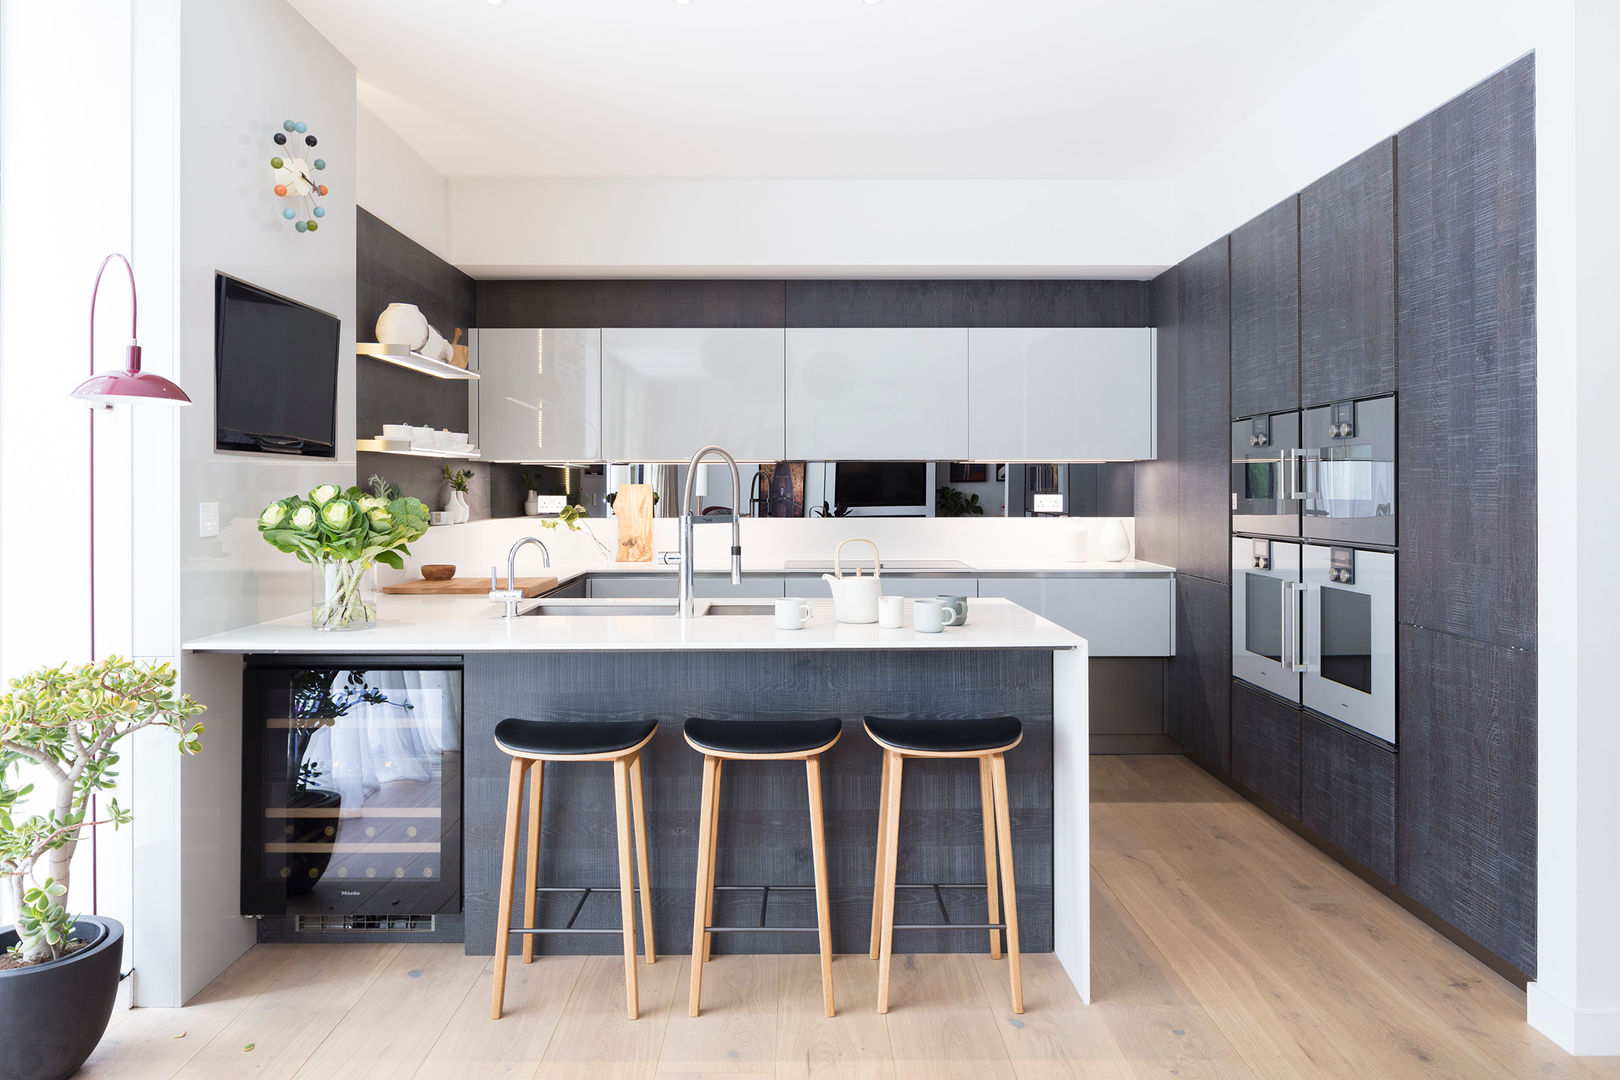 Modern New Home in Hampstead - kitchen bar Black and Milk | Interior Design | London Modern dining room kitchen bar,kitchen,bar stool,black kitchen